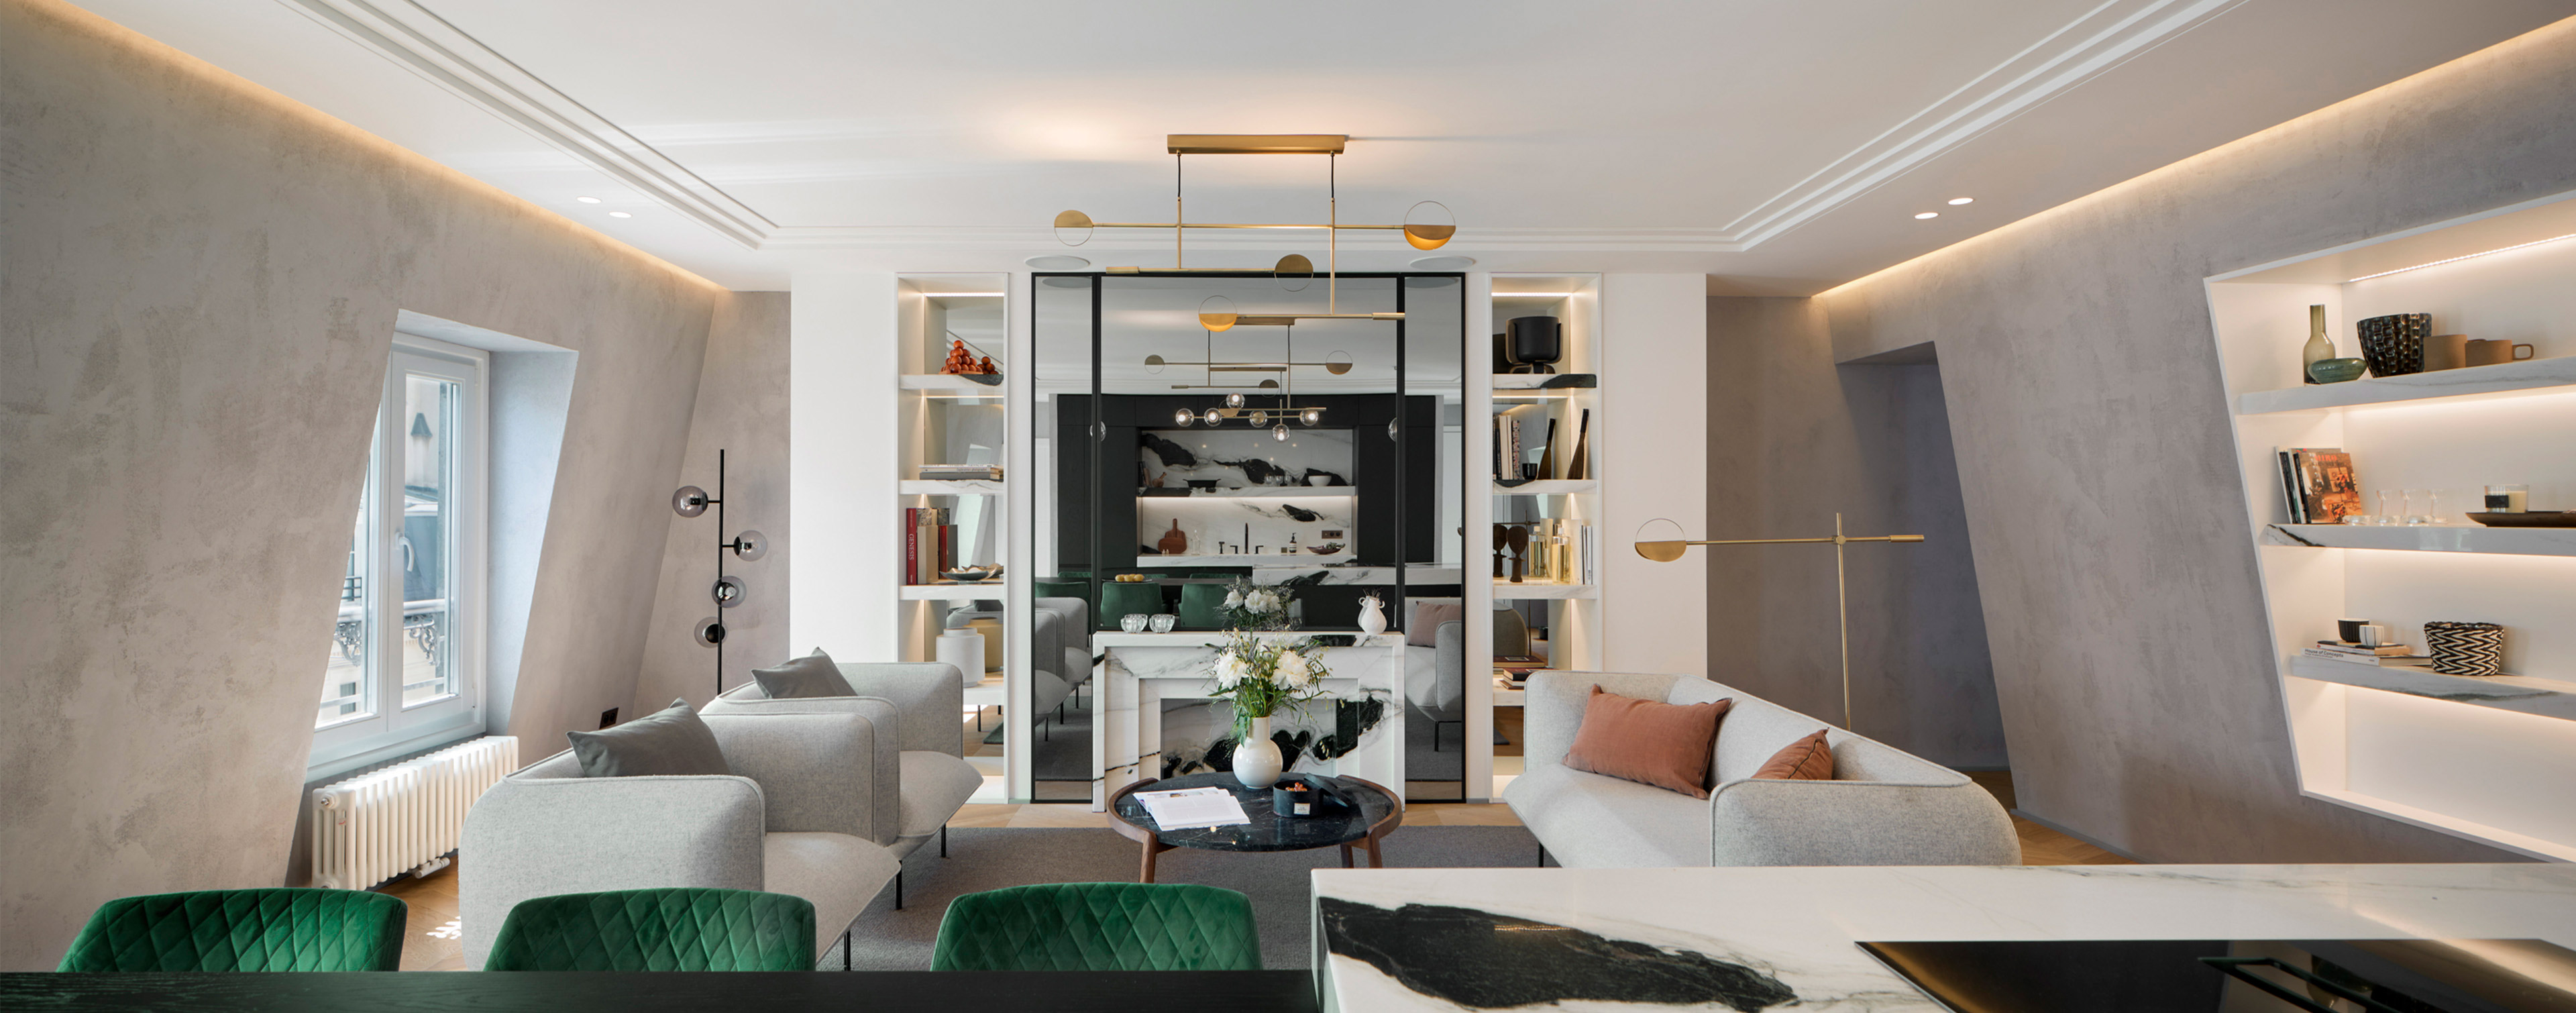 luv studio luxury architects paris chateaubriand apartment IMG 01 - LUV Studio - Architecture & Design - Barcelona